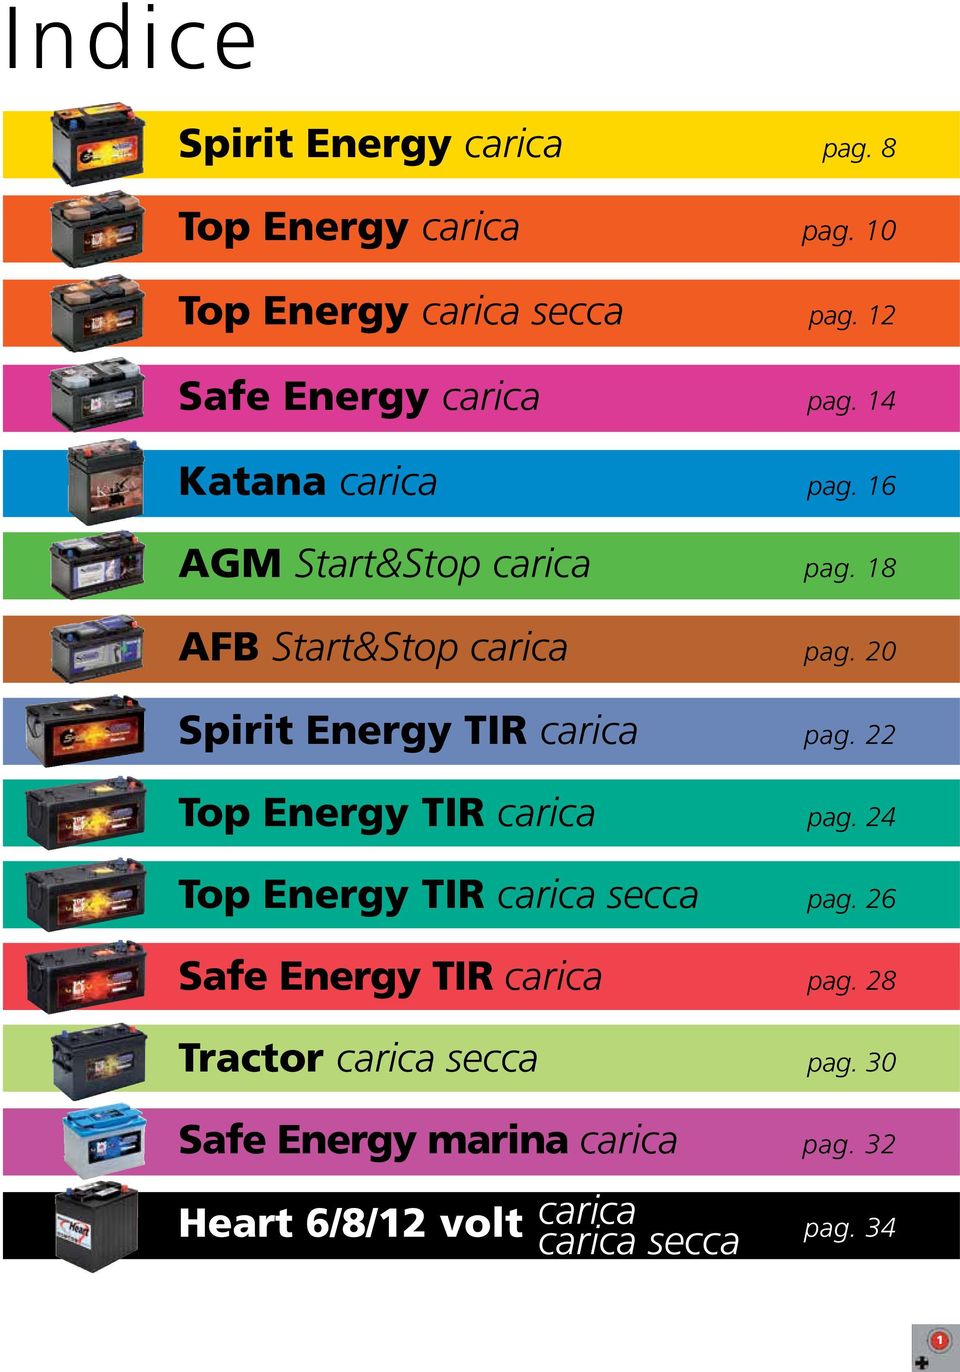 2 Spirit Energy TIR carica pag. 22 Top Energy TIR carica pag. 2 Top Energy TIR carica secca pag.